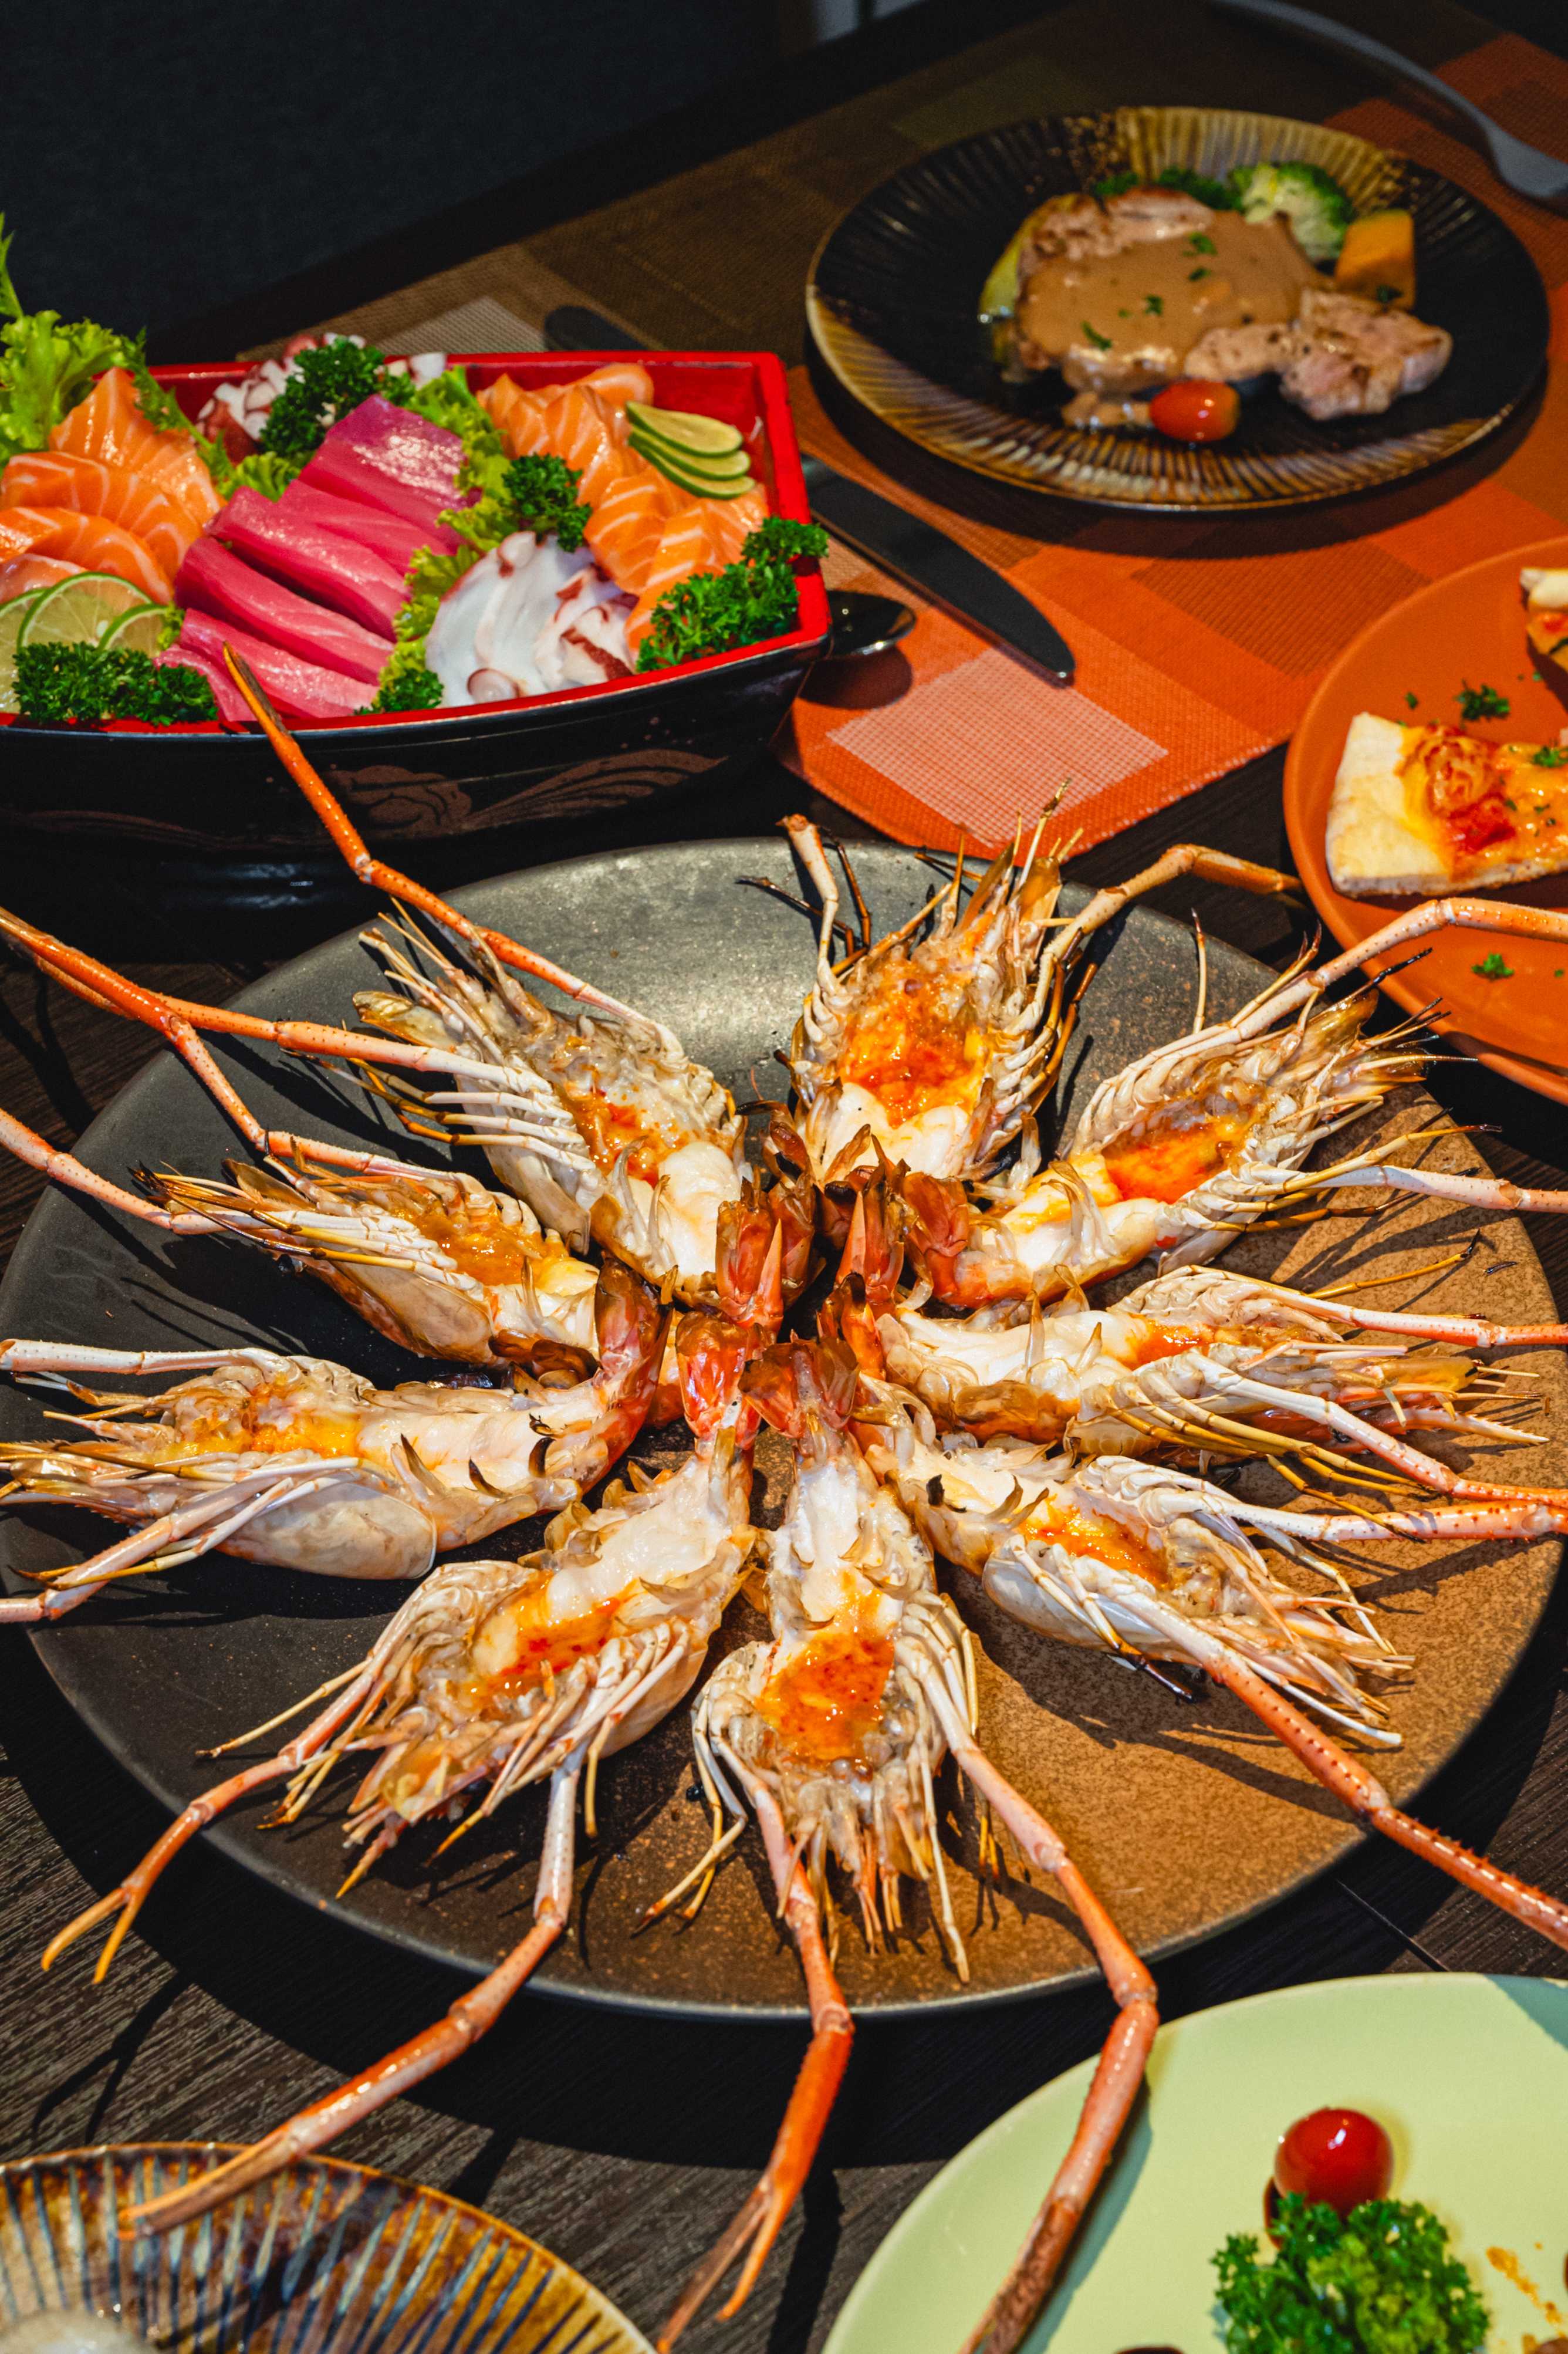 Seafood&Japanese Dinner Buffet 1099 THB